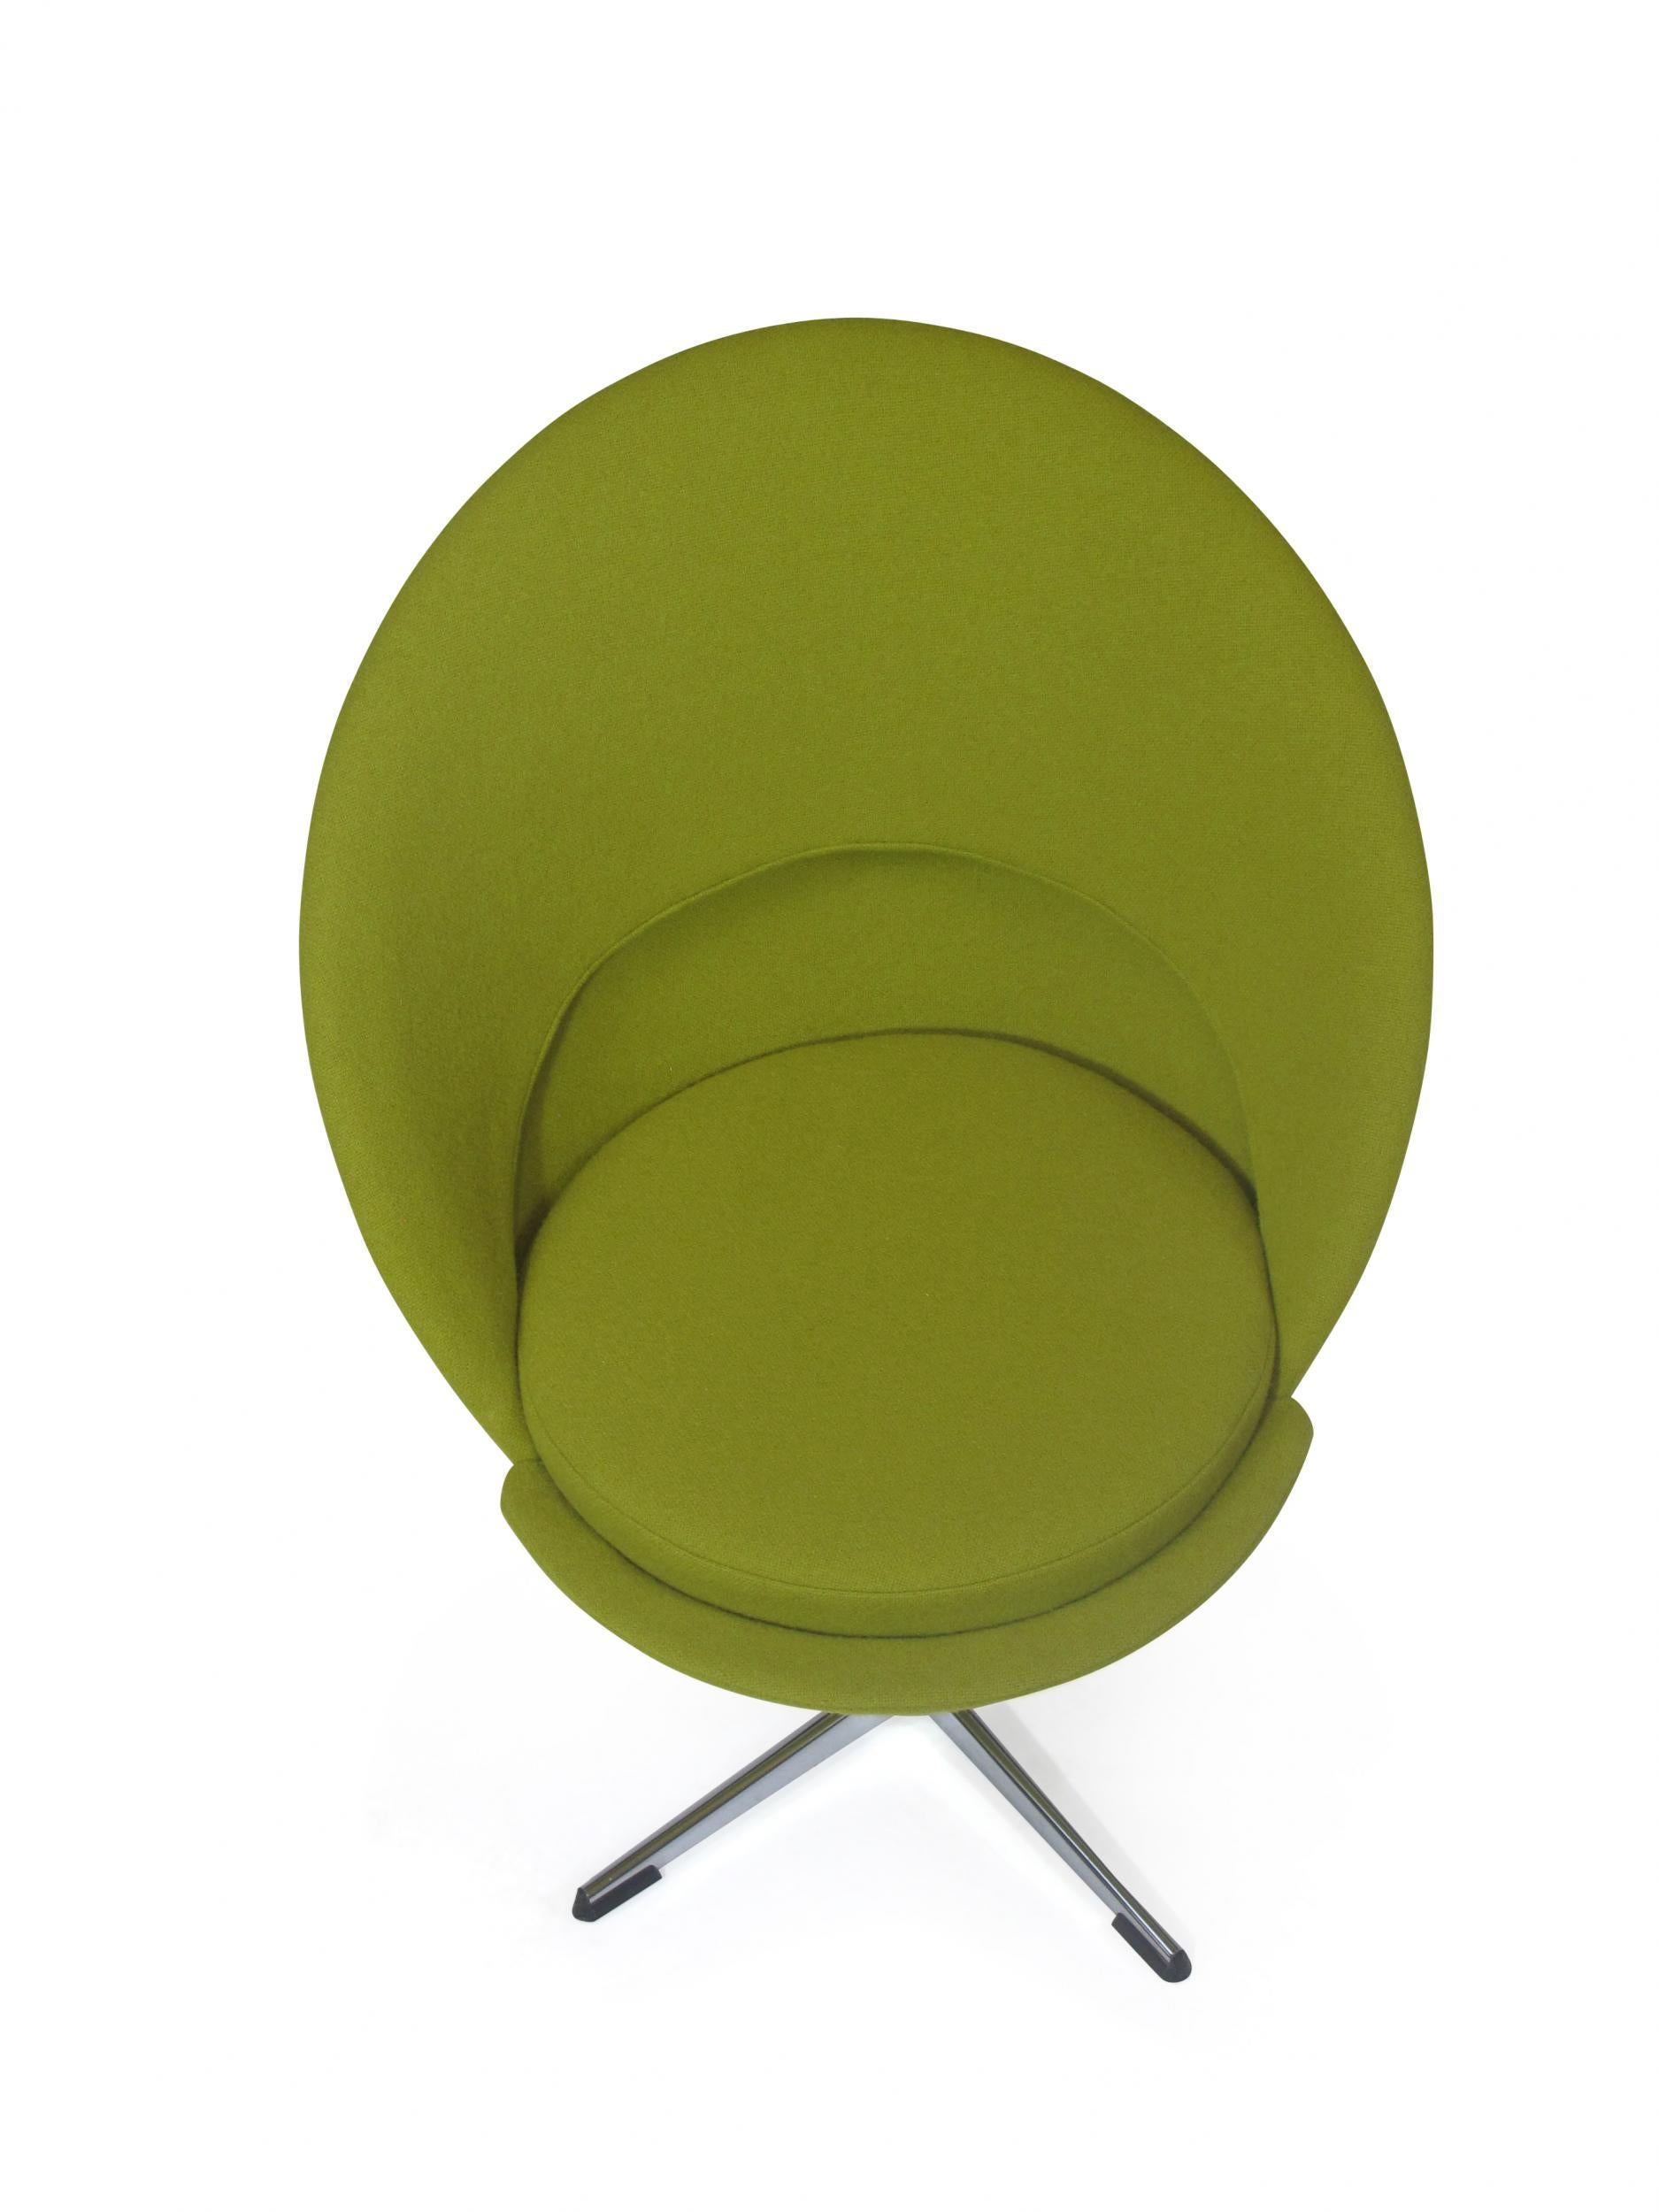 Steel Verner Panton Cone Chair For Sale